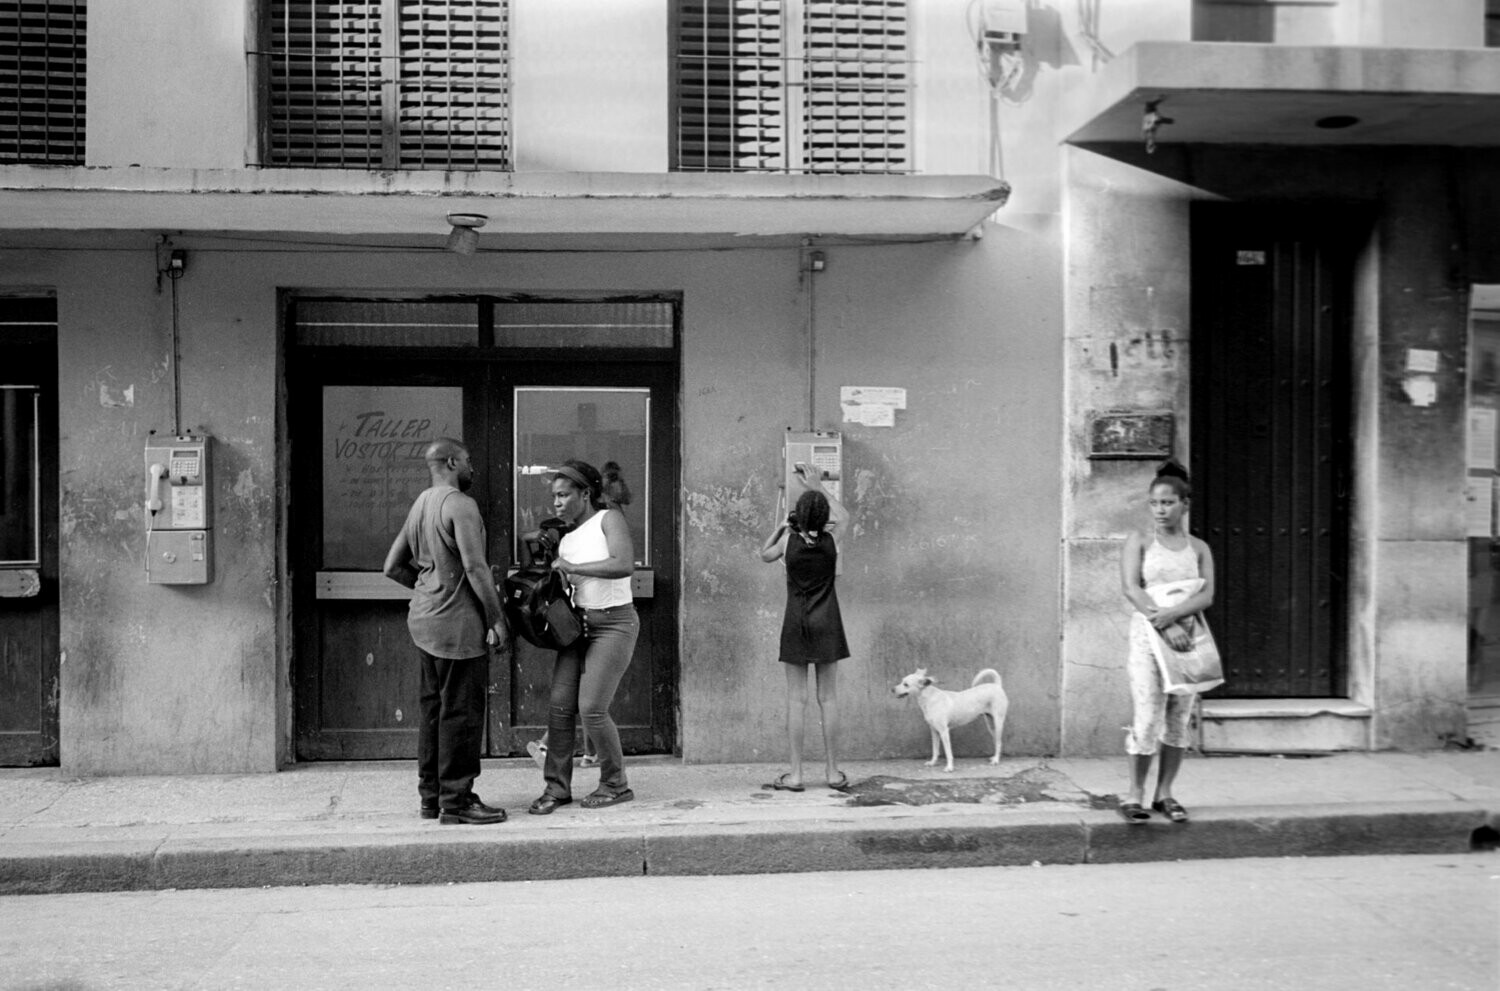 Theatre of the street: Havana, Cuba, 2002